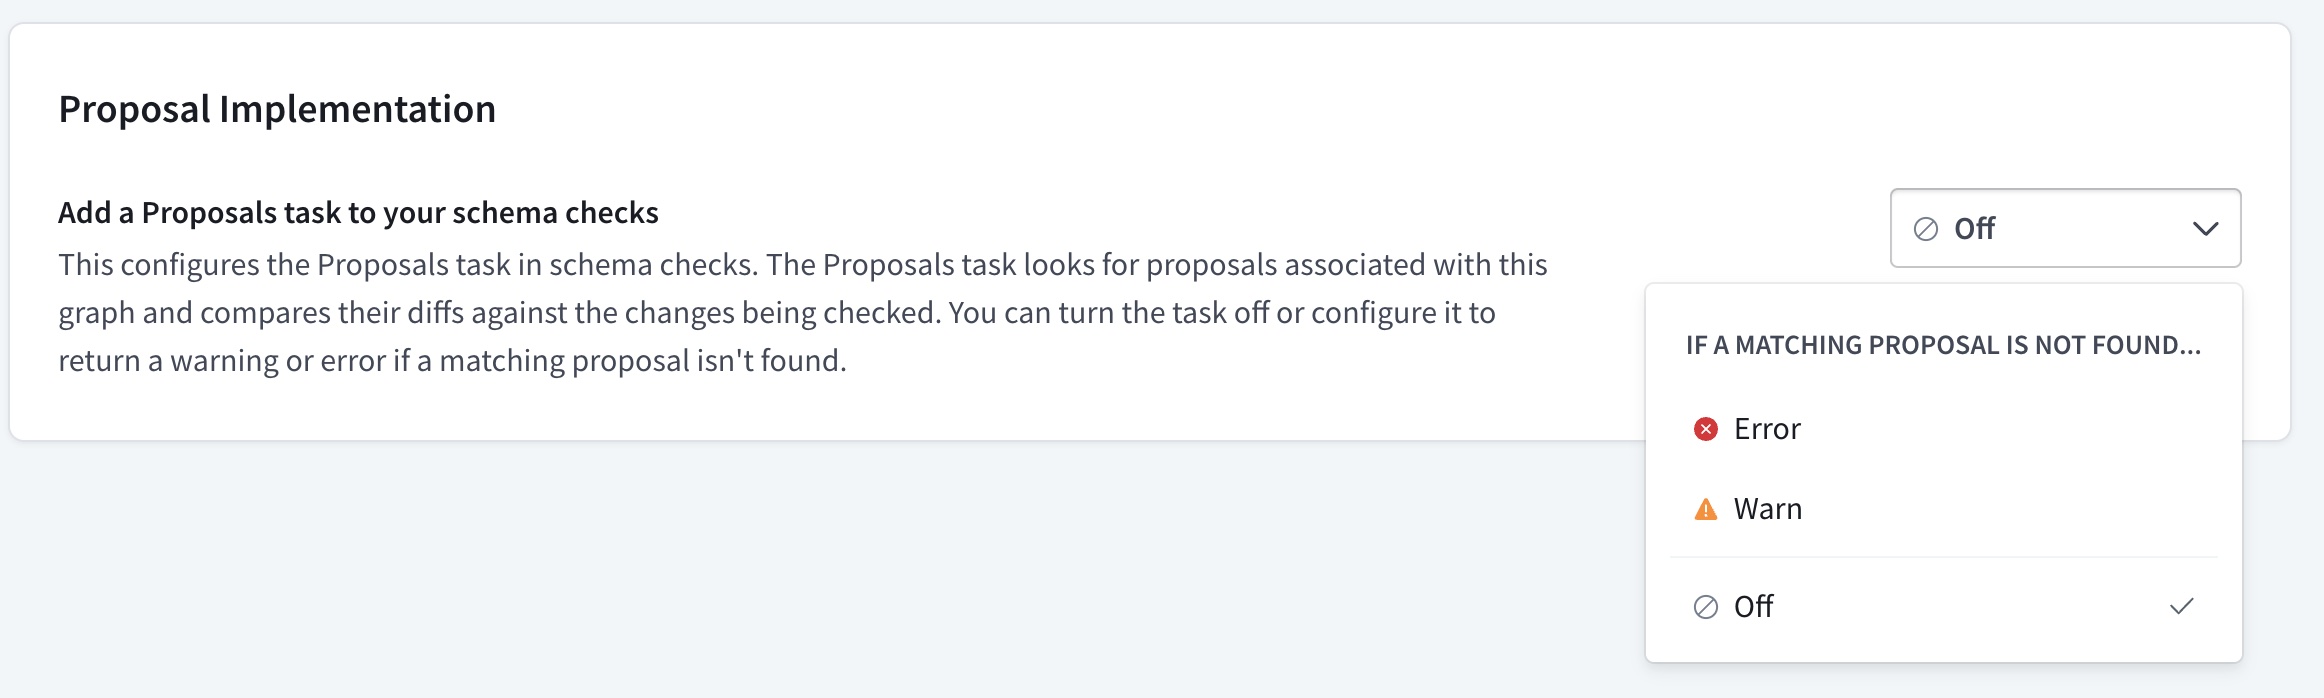 Proposal check settings in GraphOS Studio